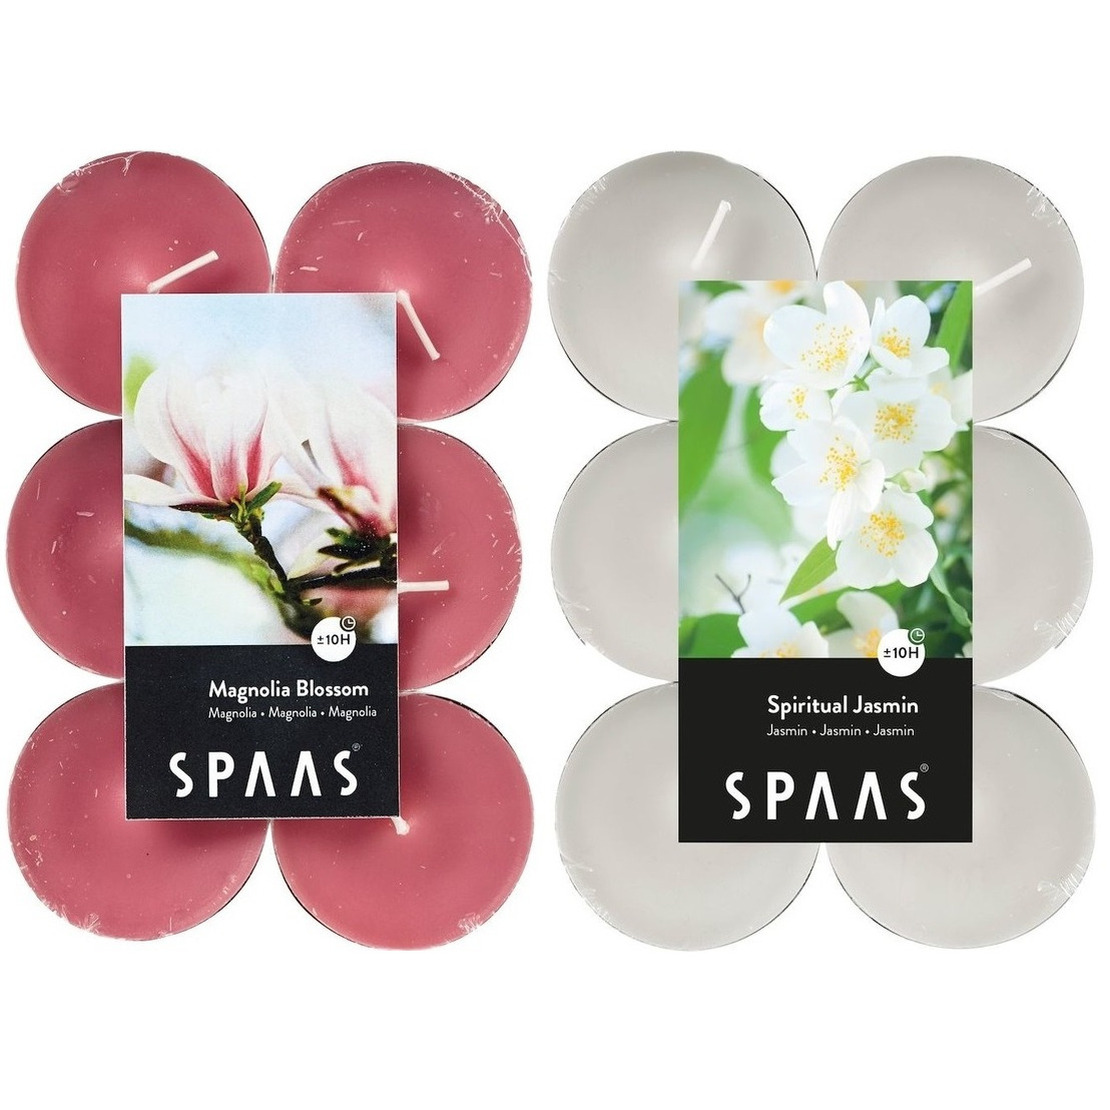 Candles by Spaas geurkaarsen 24x stuks in 2 geuren Jasmin en Magnolia Flowers